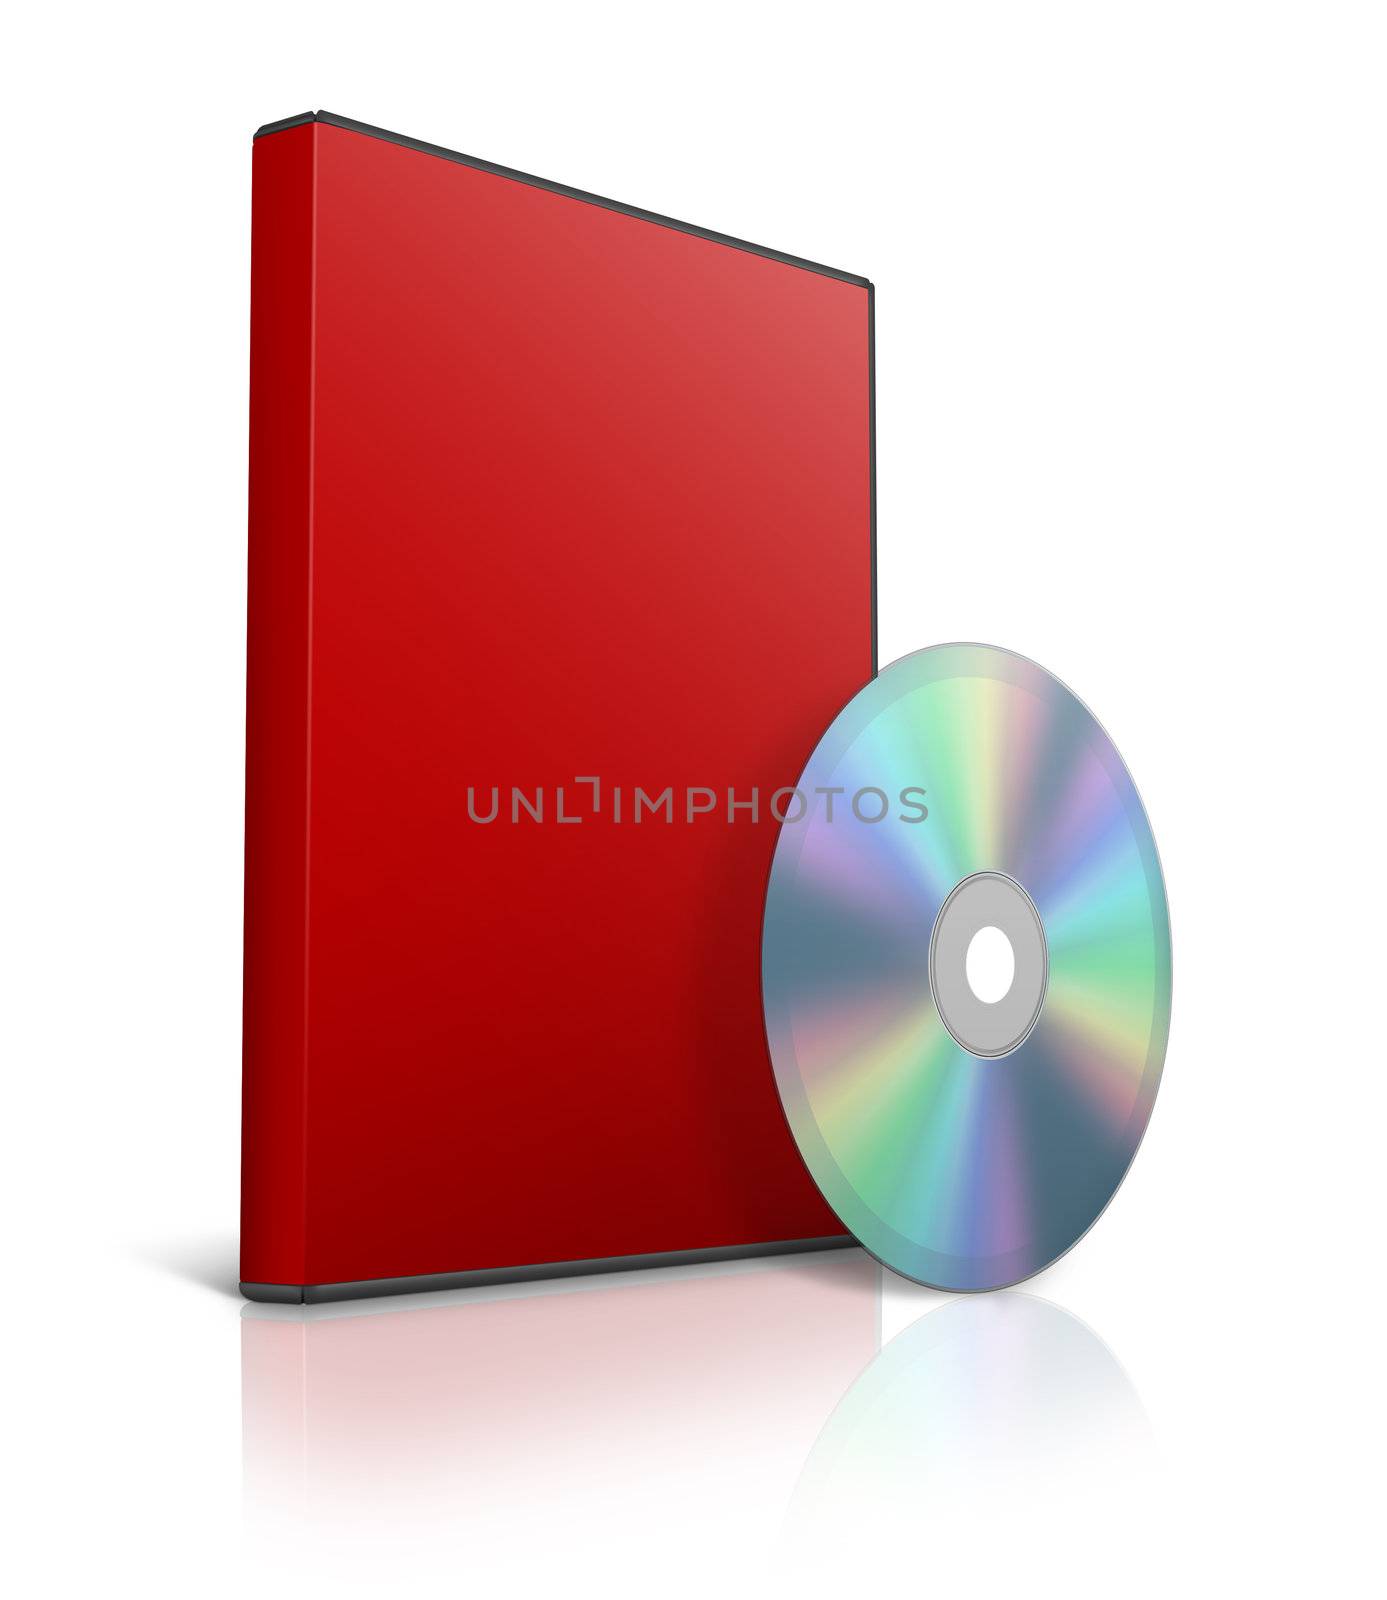 software DVD by mereutaandrei